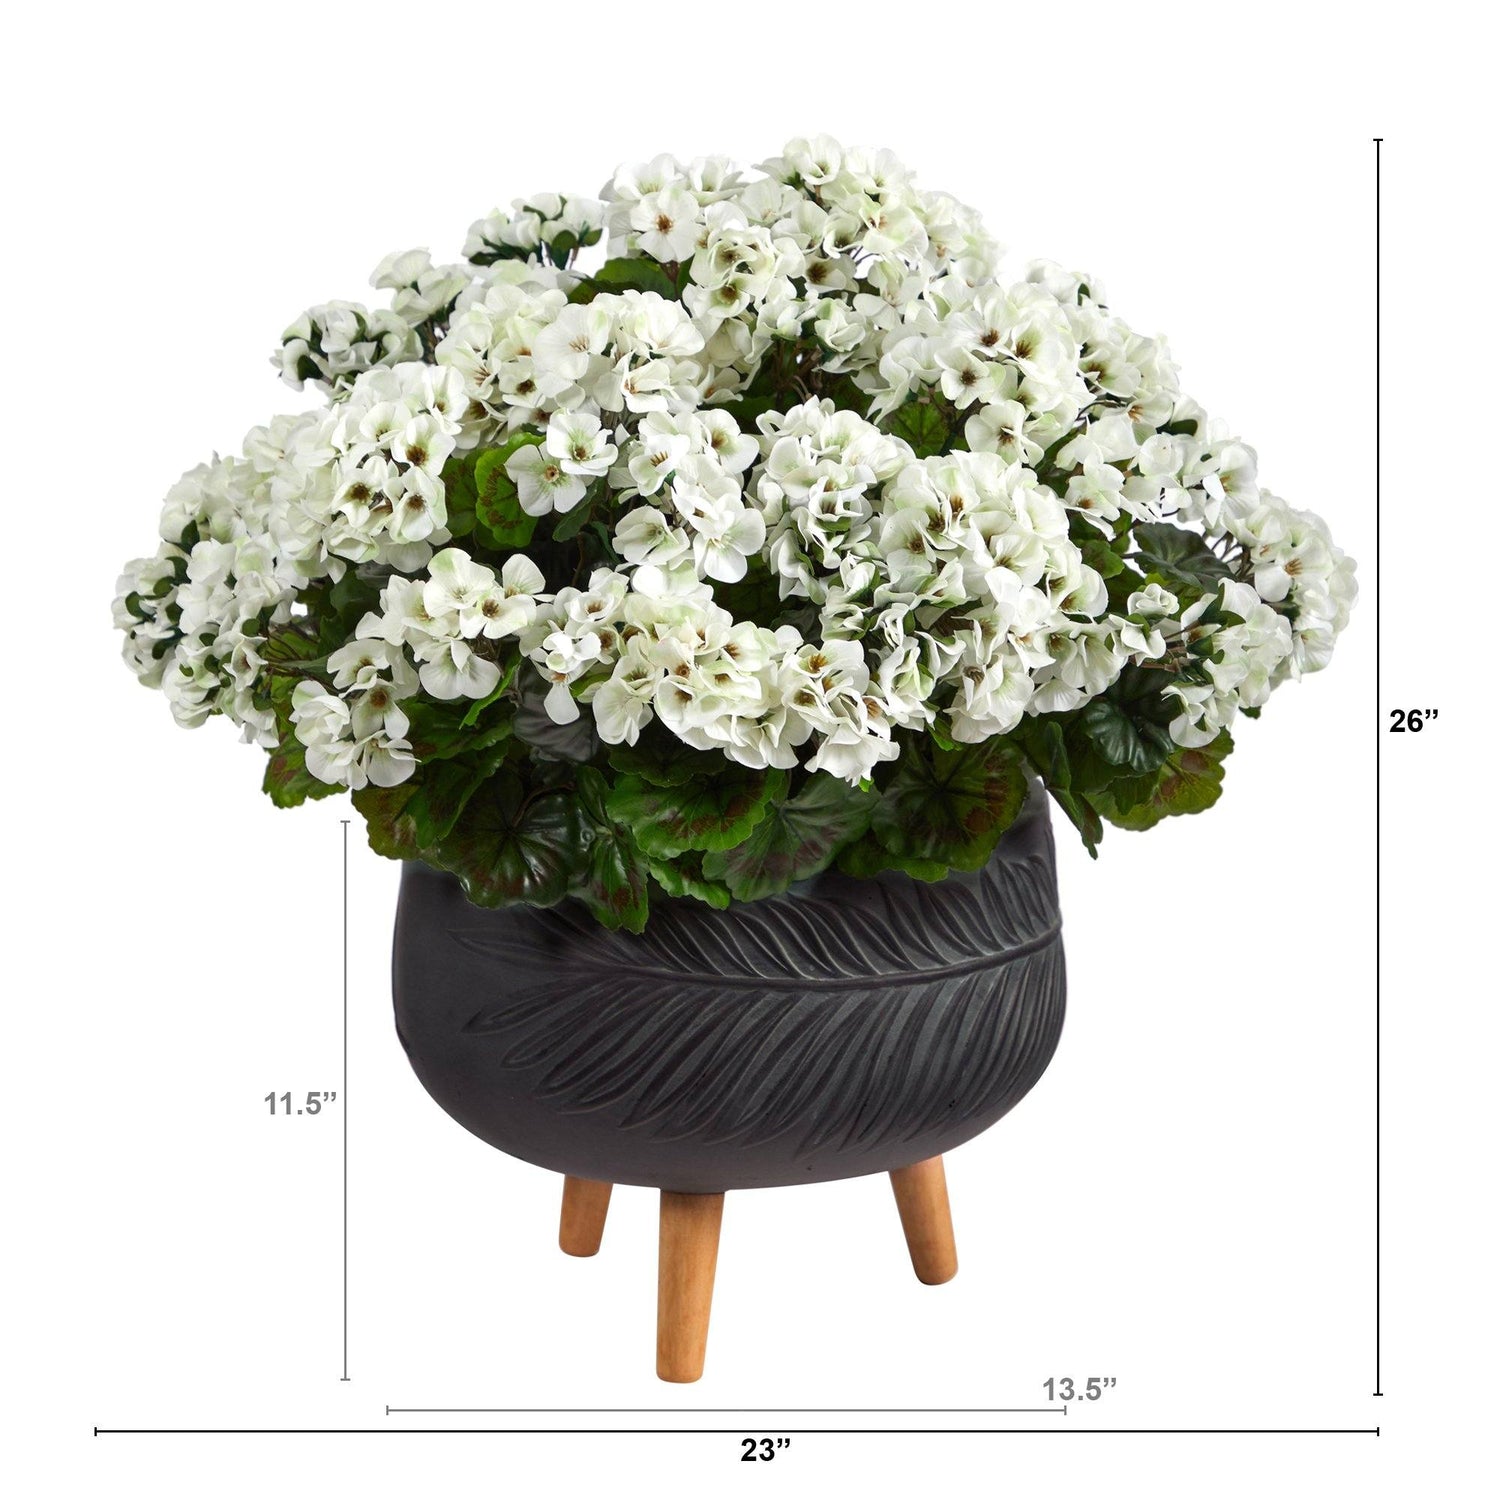 26” Geranium Artificial Plant in Black Planter with Stand UV Resistant (Indoor/Outdoor)